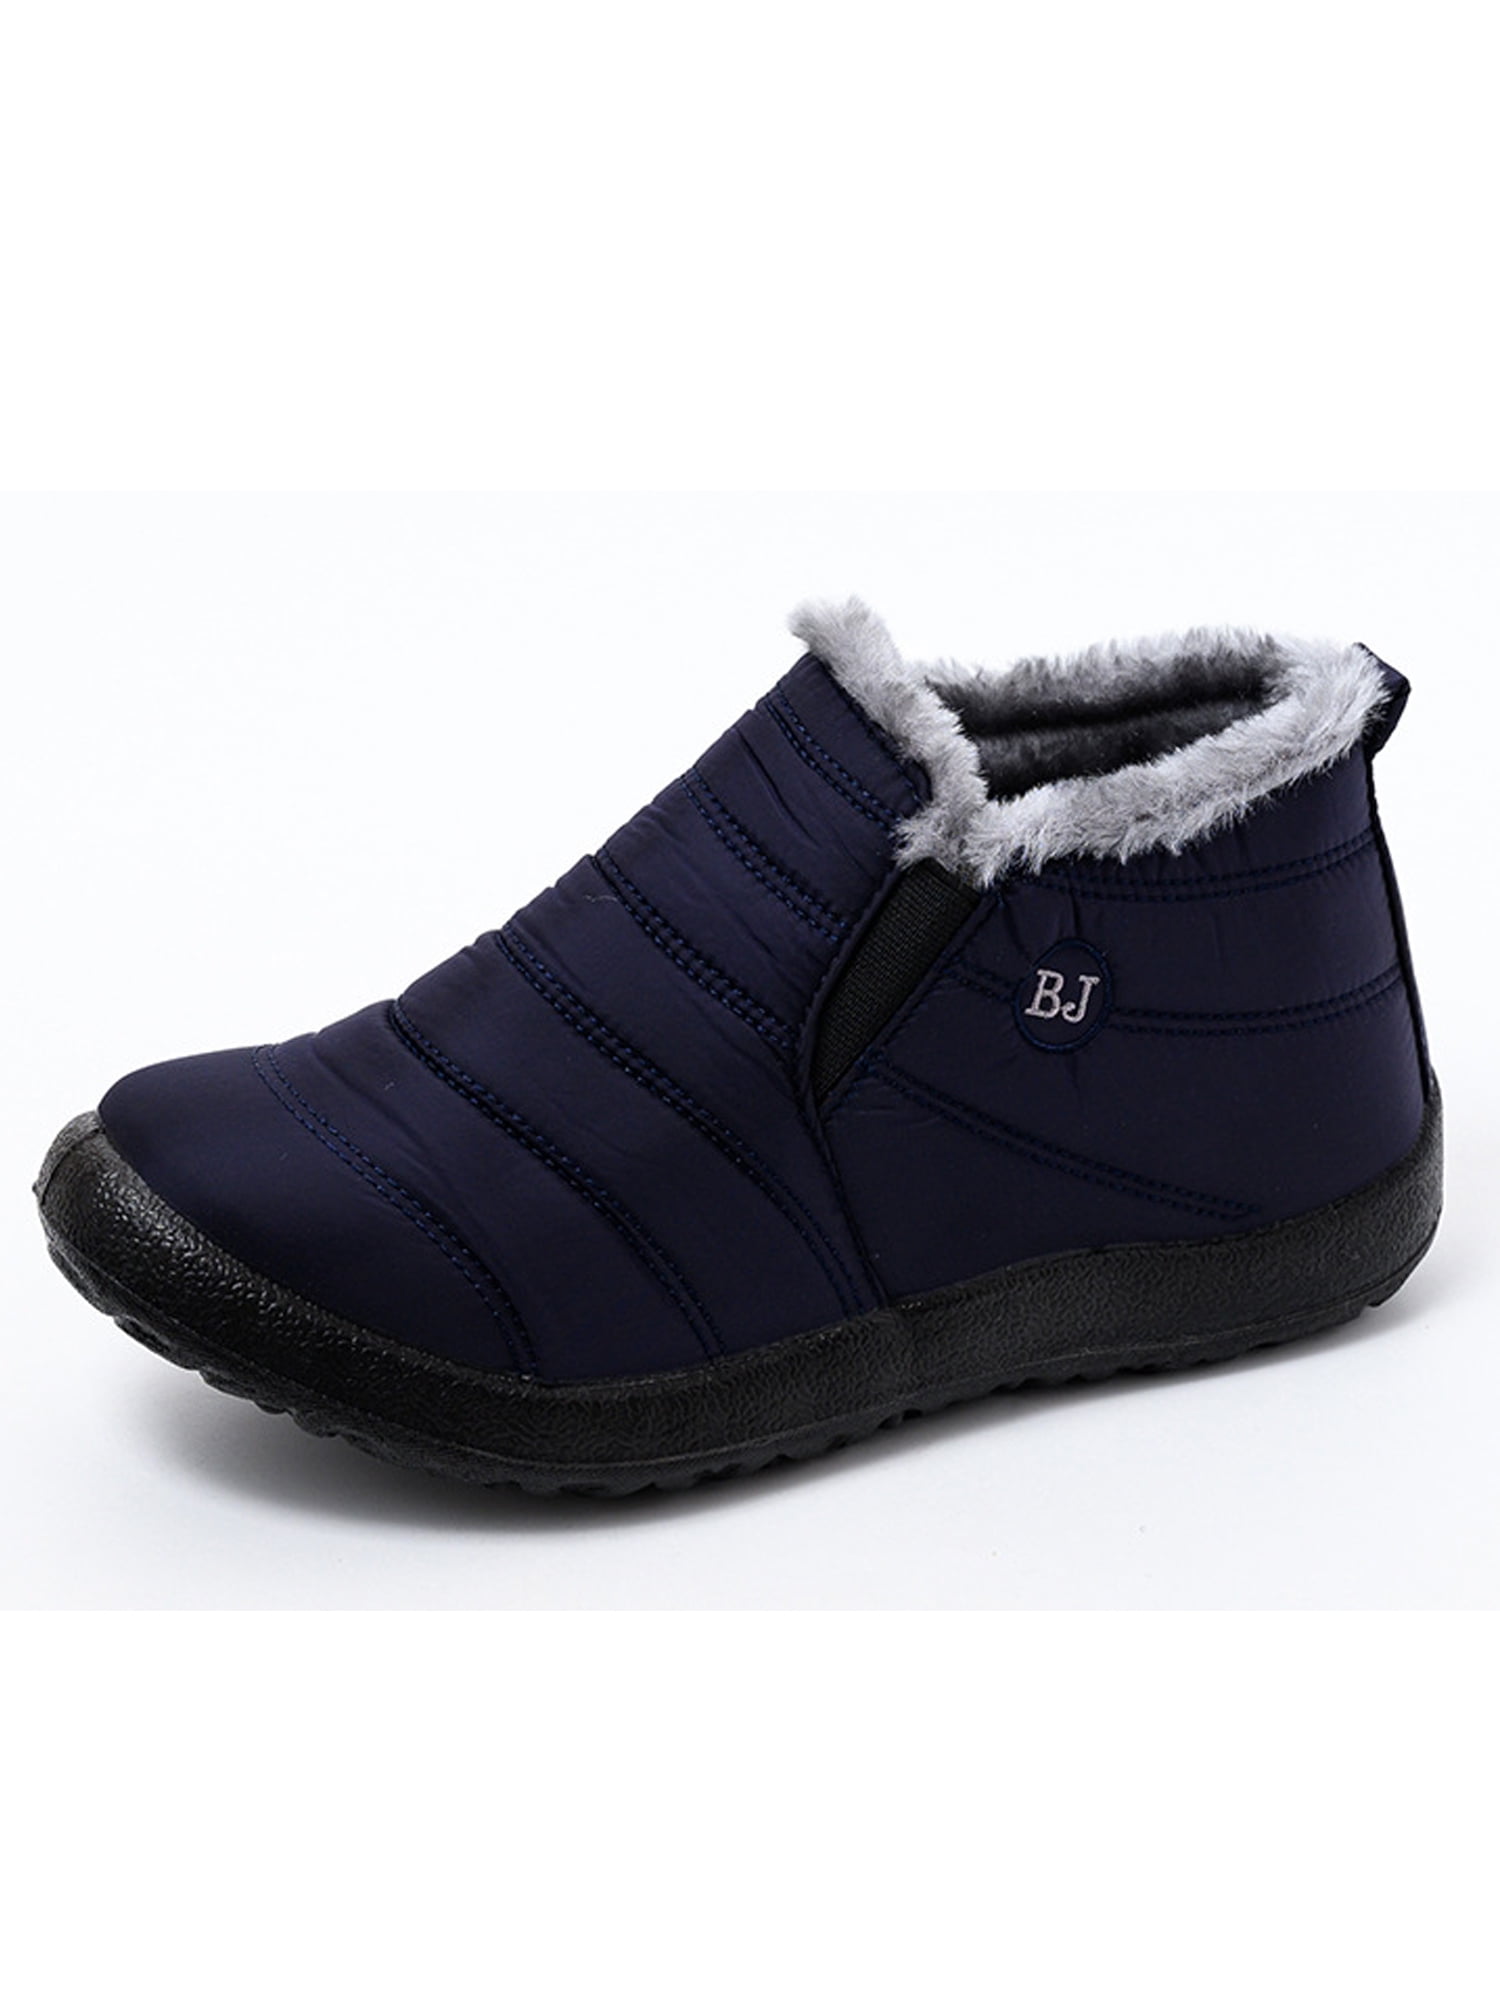 Men Women Winter Snow Boots Fashion Plush Warm Shoes Waterproof Slip On Boots 